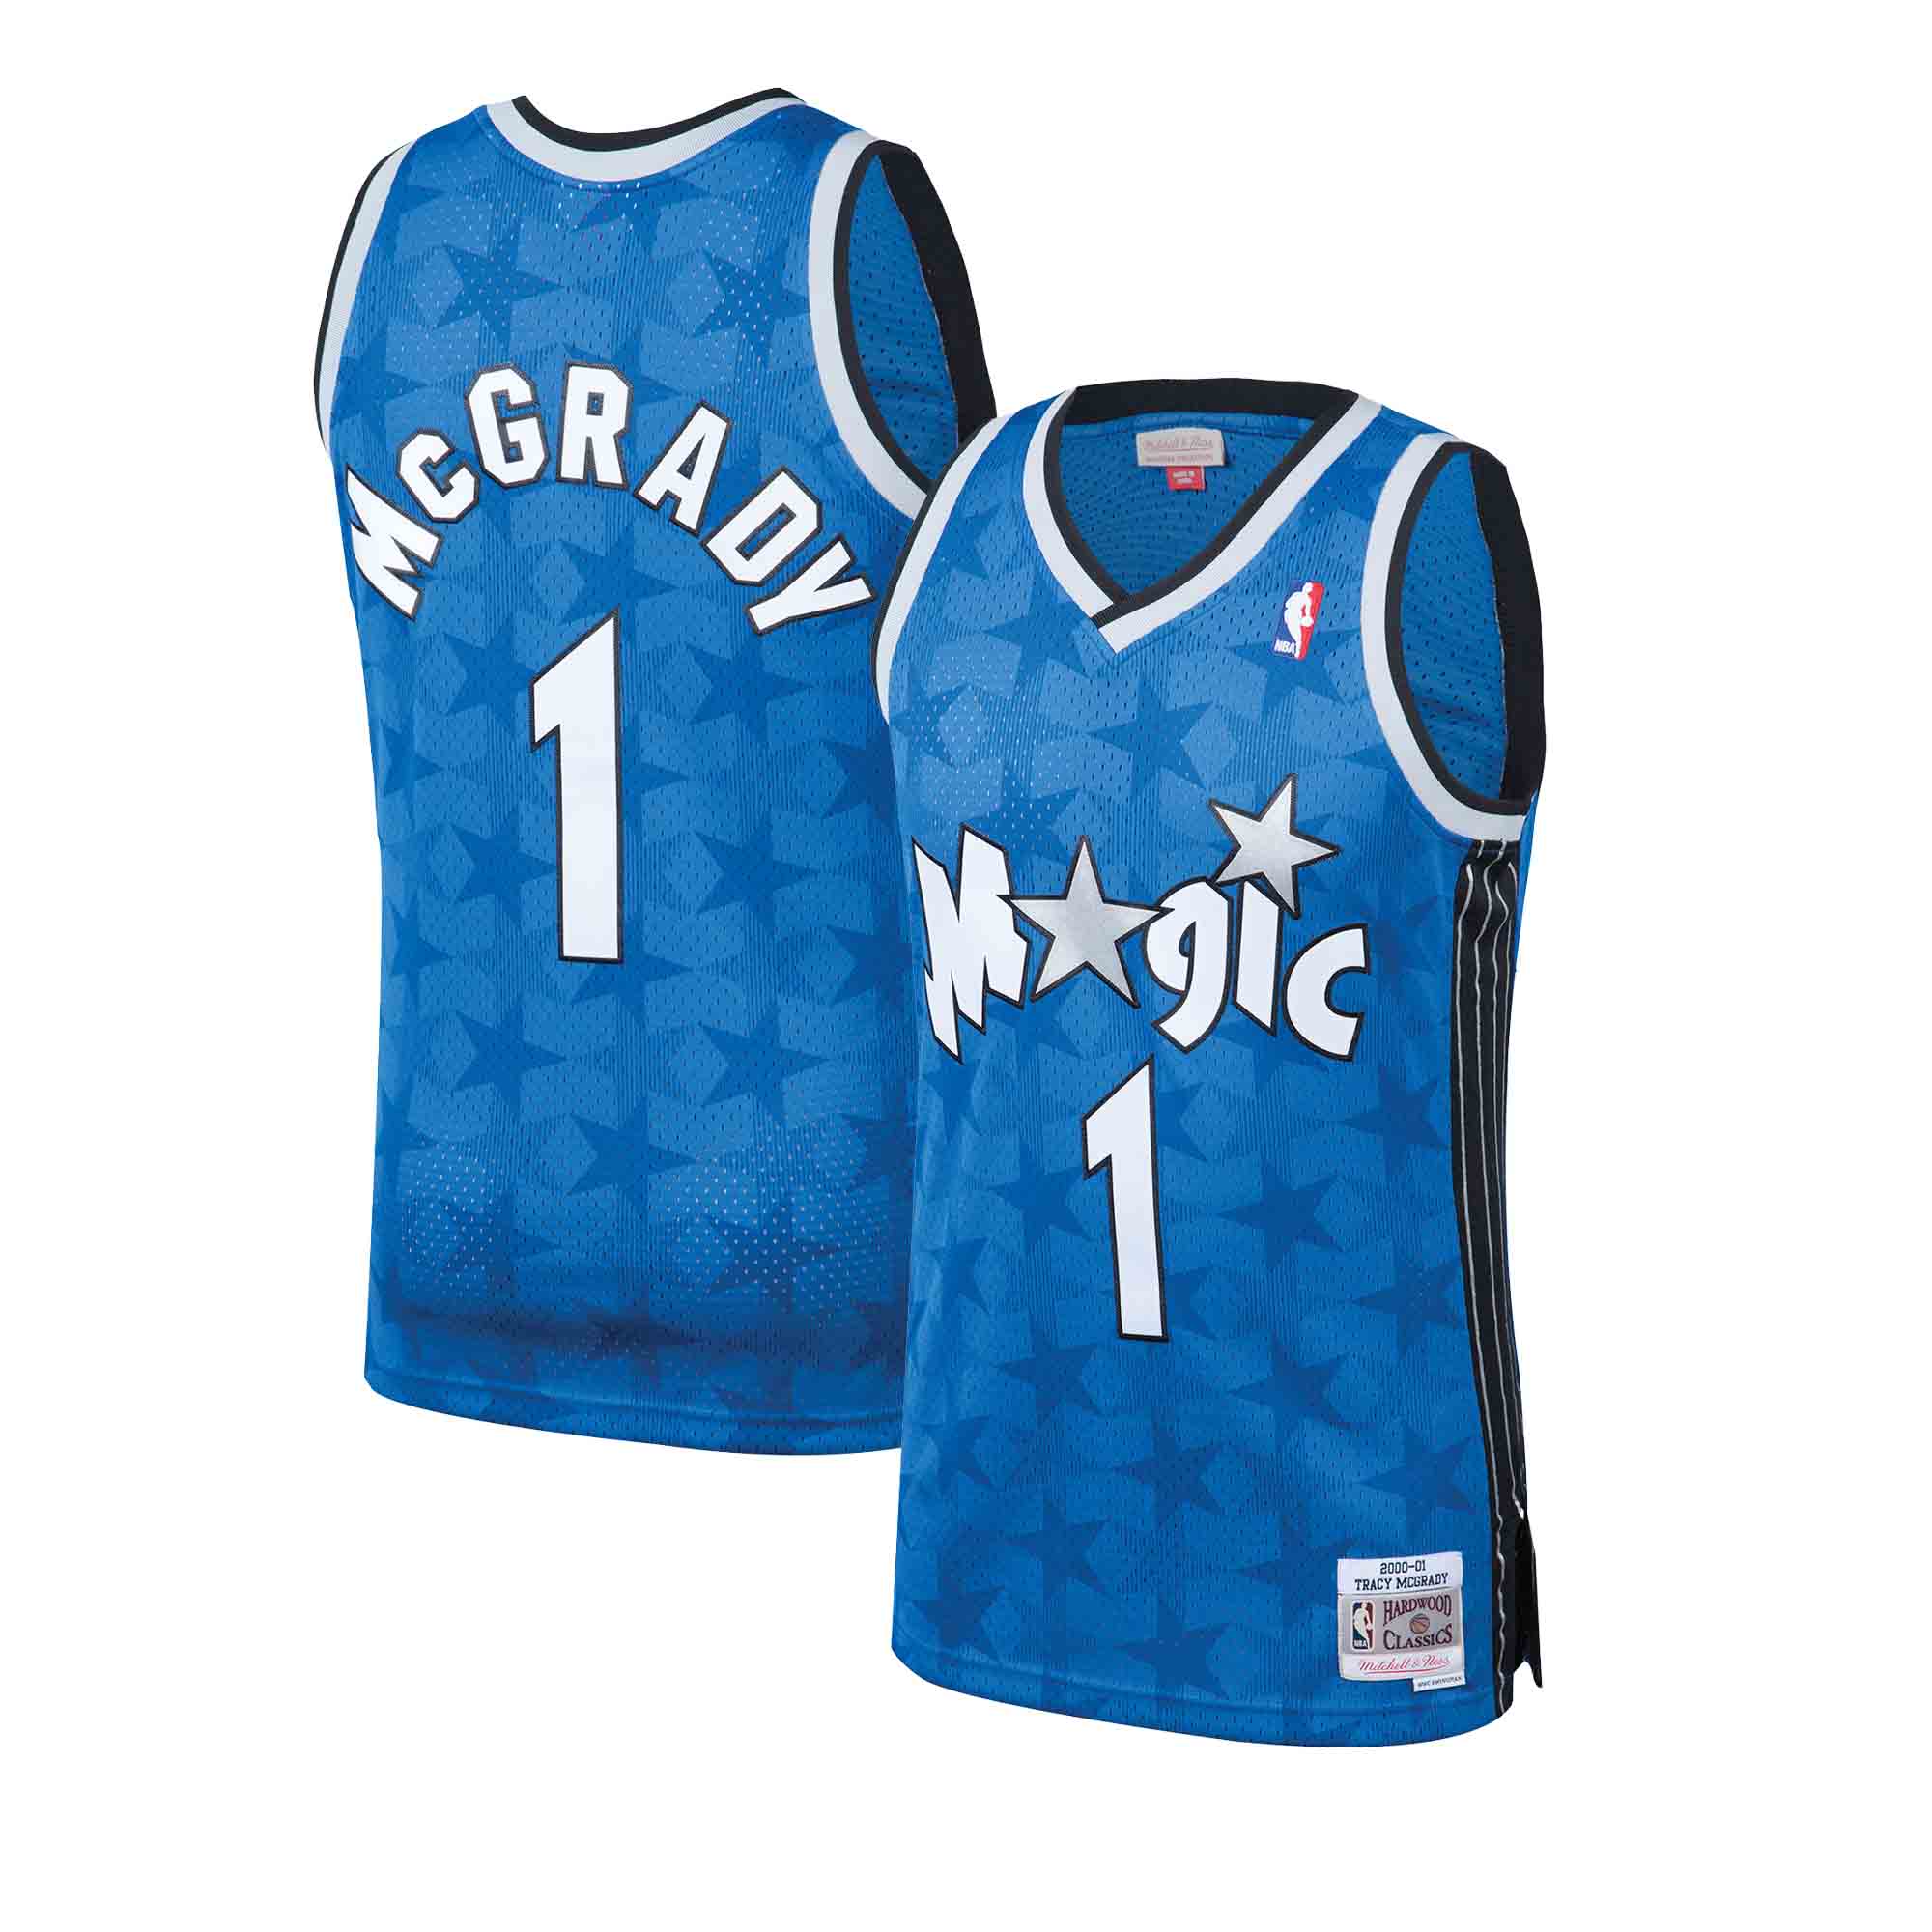 Buy the Mens Blue Striped Orlando Magic Tracy McGrady #1